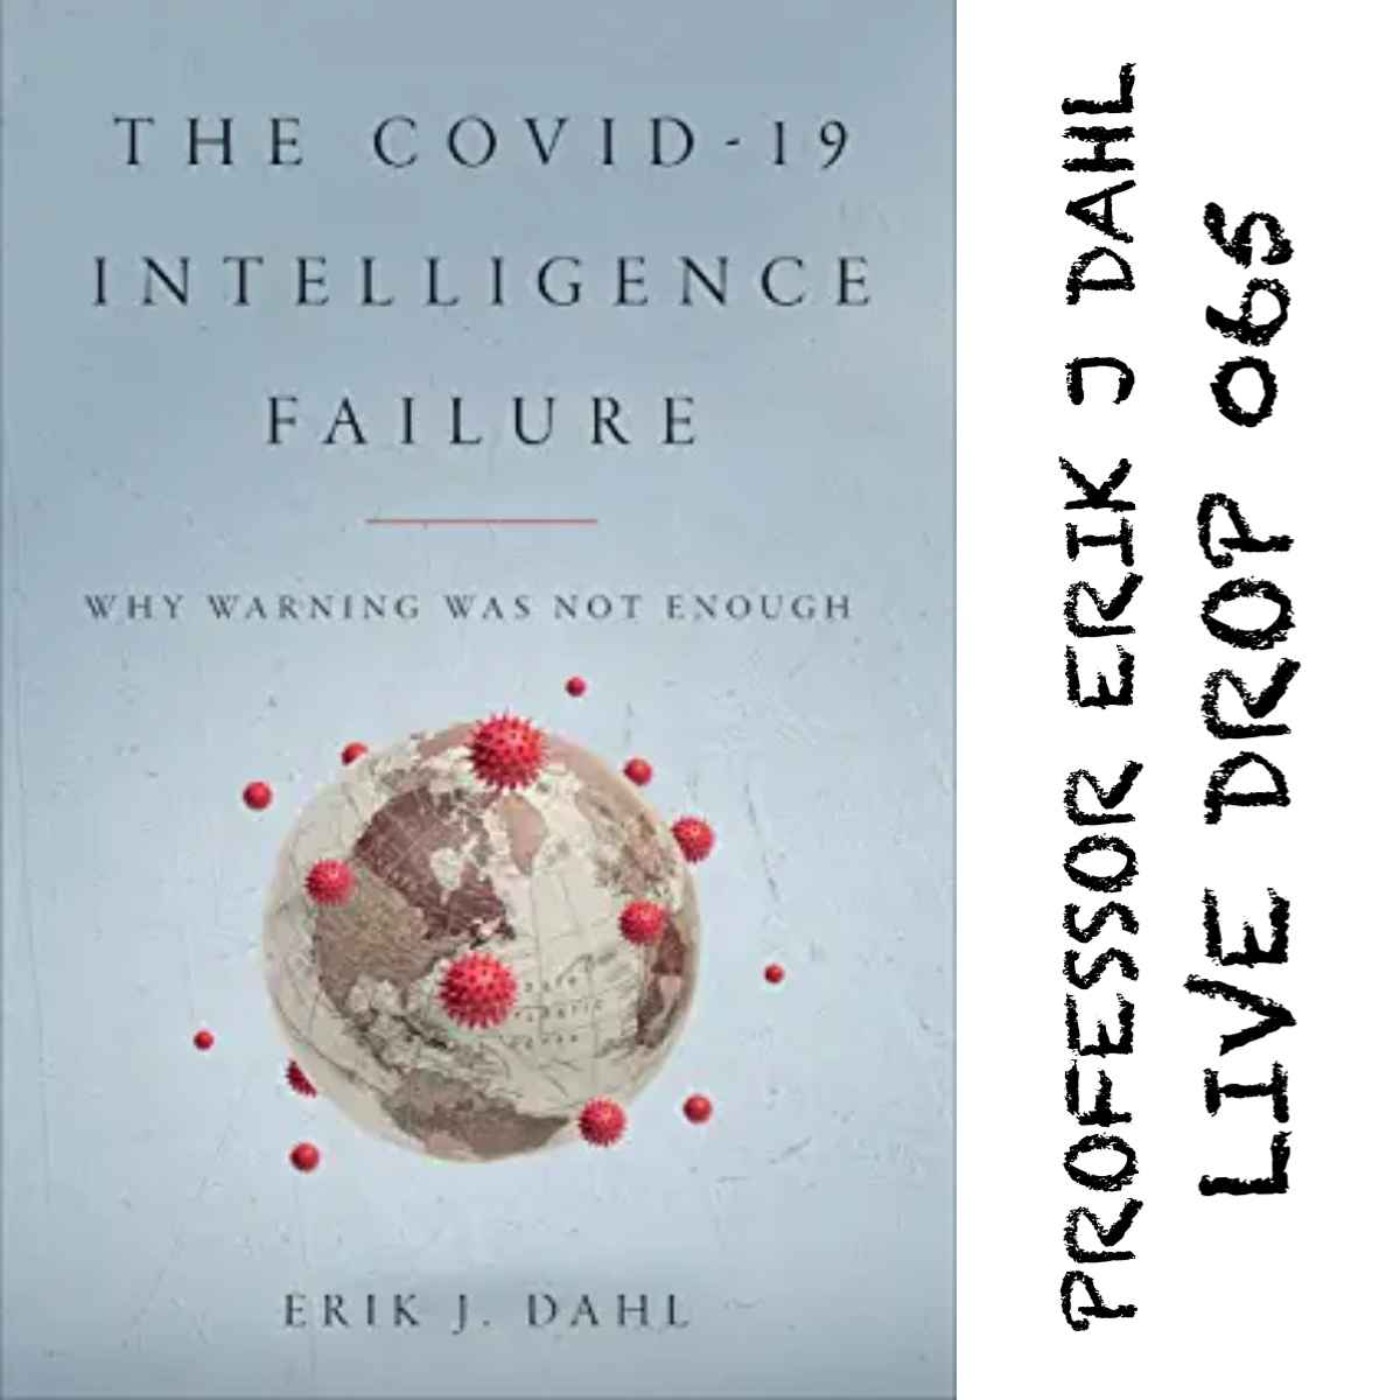 Professor Erik Dahl Offers a Prescription for Pandemic Intelligence